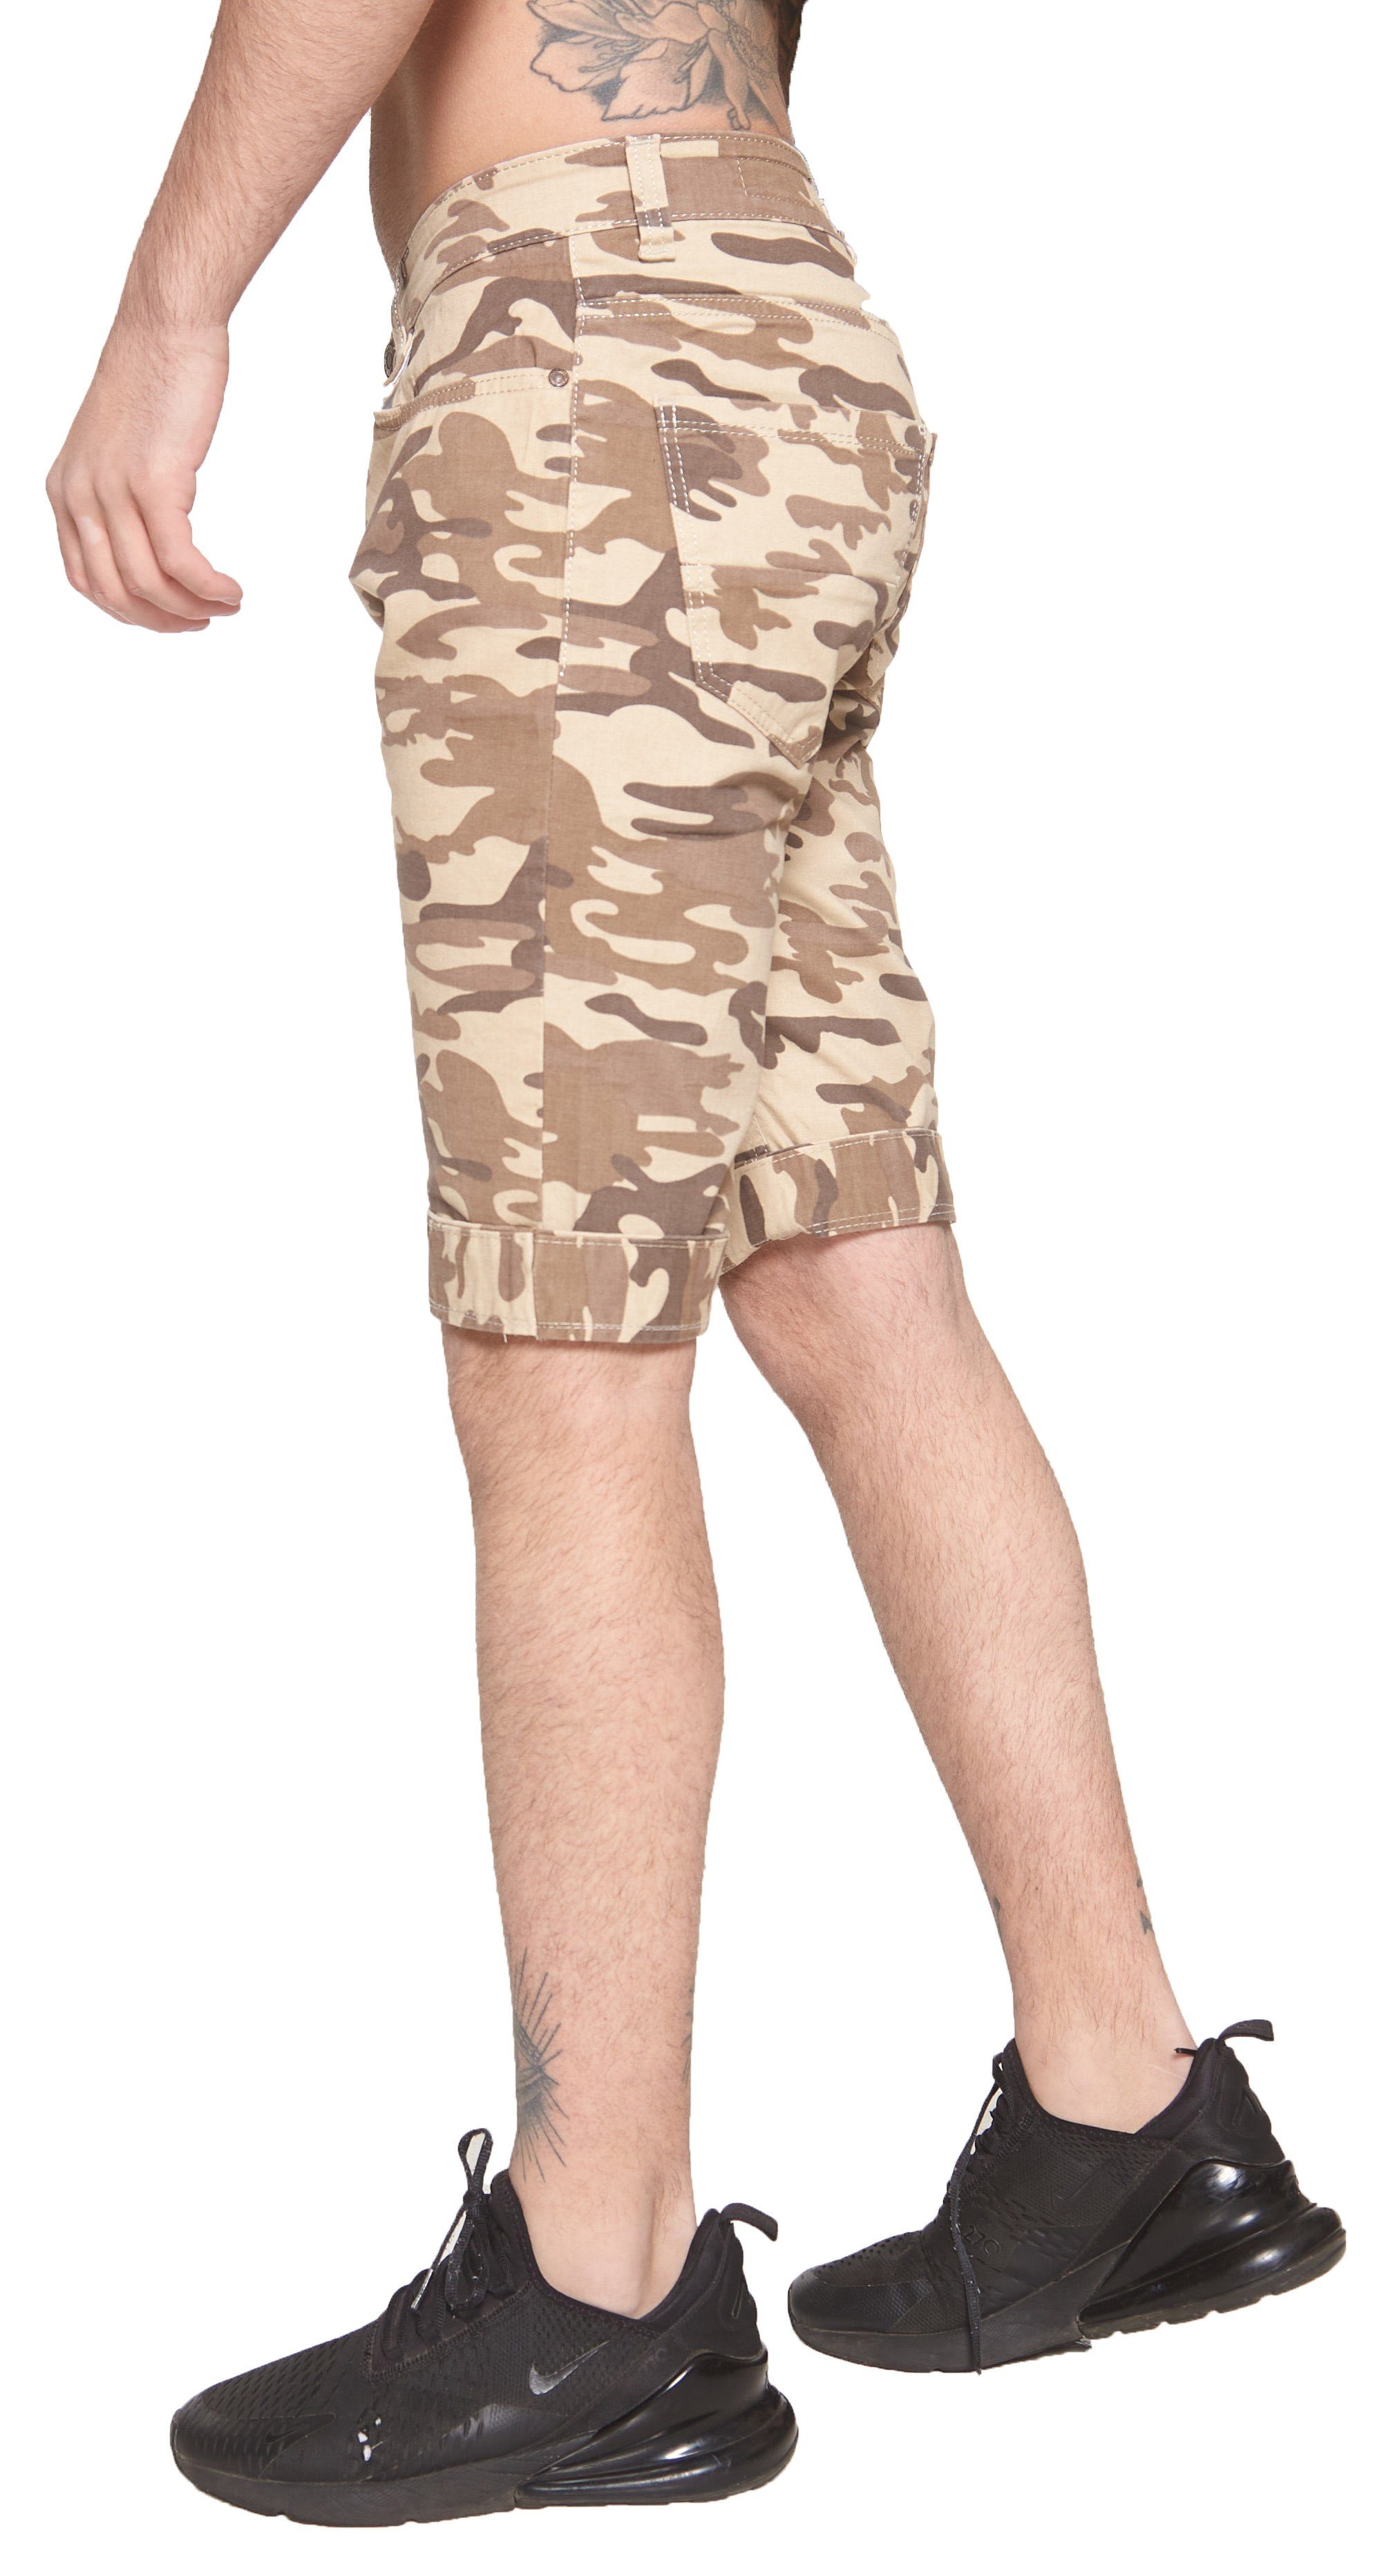 Shorts Bermudas Mixed Kayna 1-tlg., Sweatpants, Color Kurze Camouflage Männer Jeans Hose Freizeit John im Design) modischem Herren Hose Casual Fitness (Kurze Bermudas